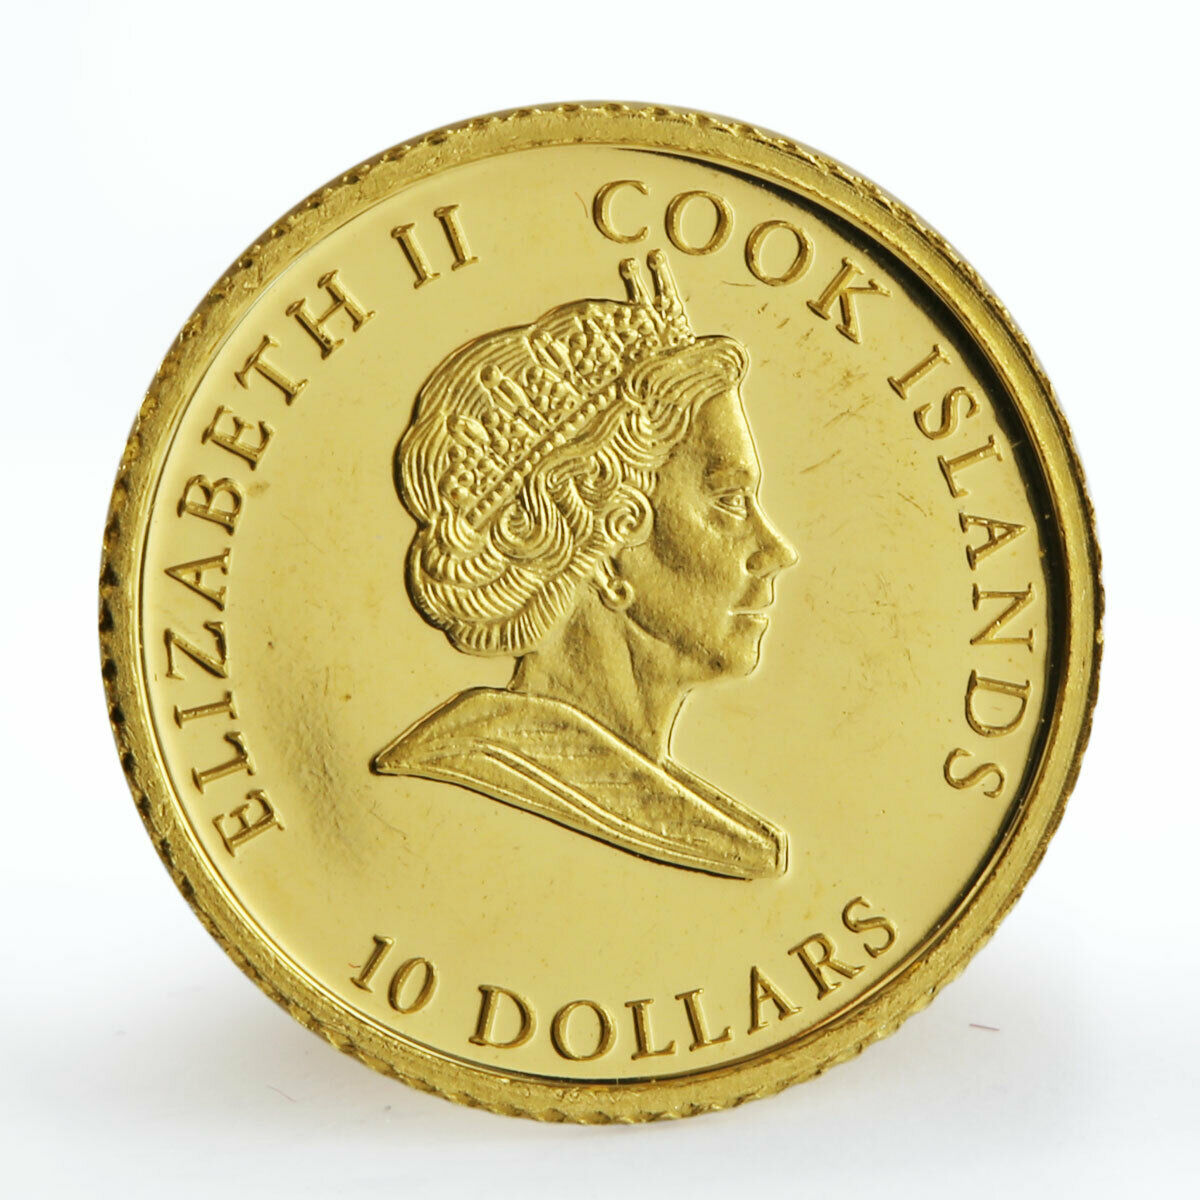 Cook Islands 10 dollars Carl XVI Gustaf King of Sweden gold coin 2007